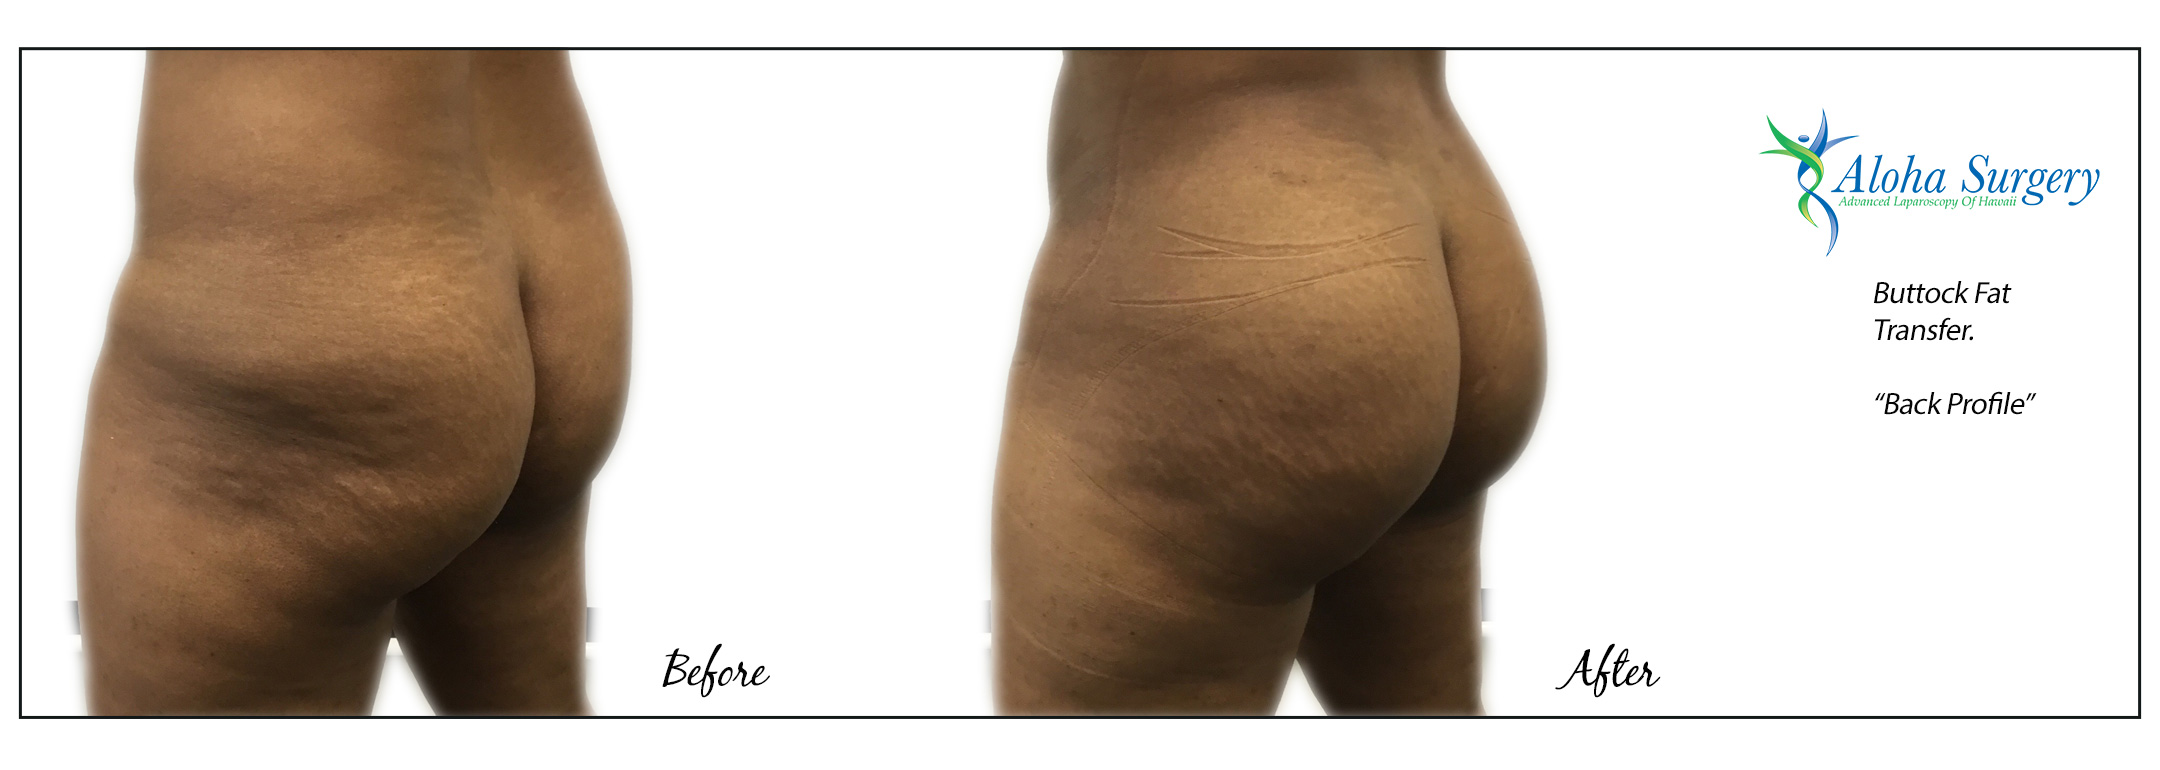 Aloha Surgery Buttock Fat Transfer